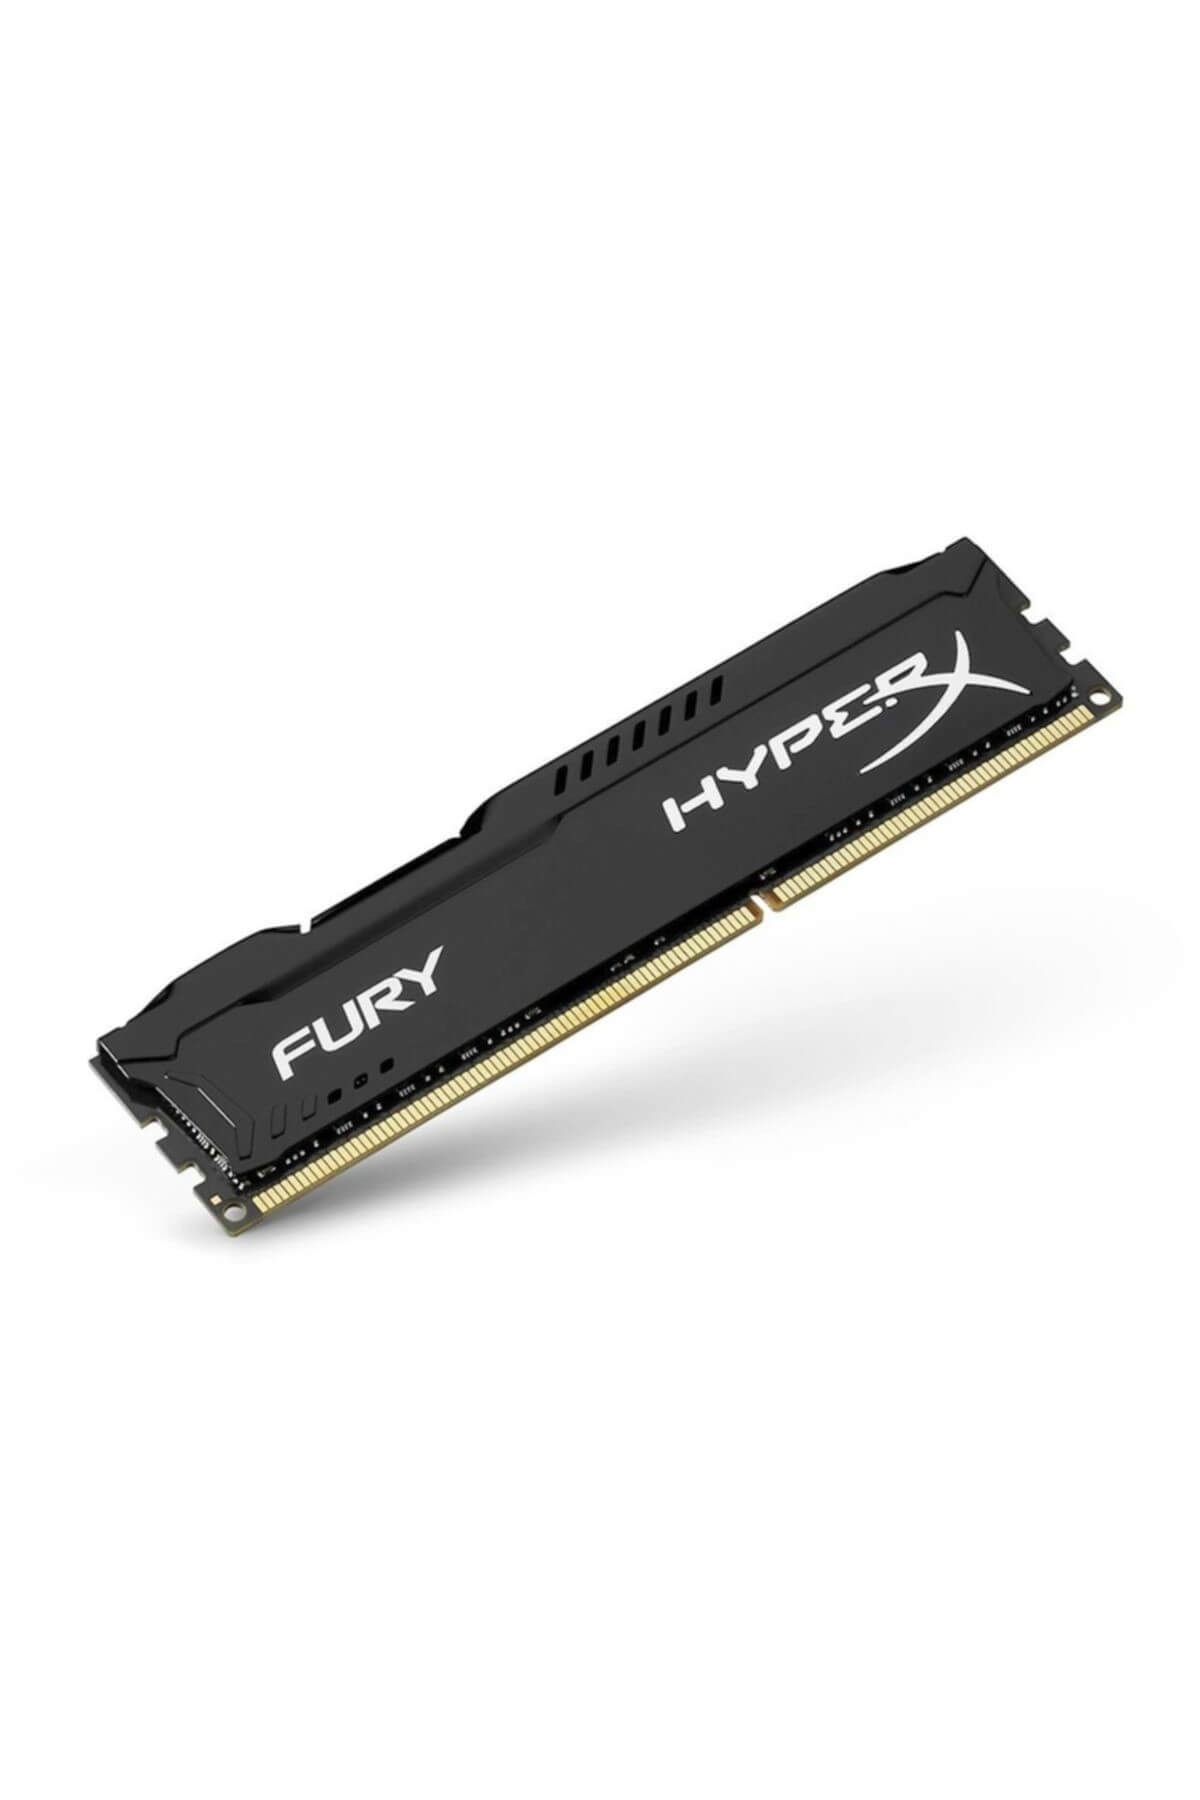 Kingston HyperX Fury Black 8GB 1600MHz DDR3 Ram (HX316C10FB/8)